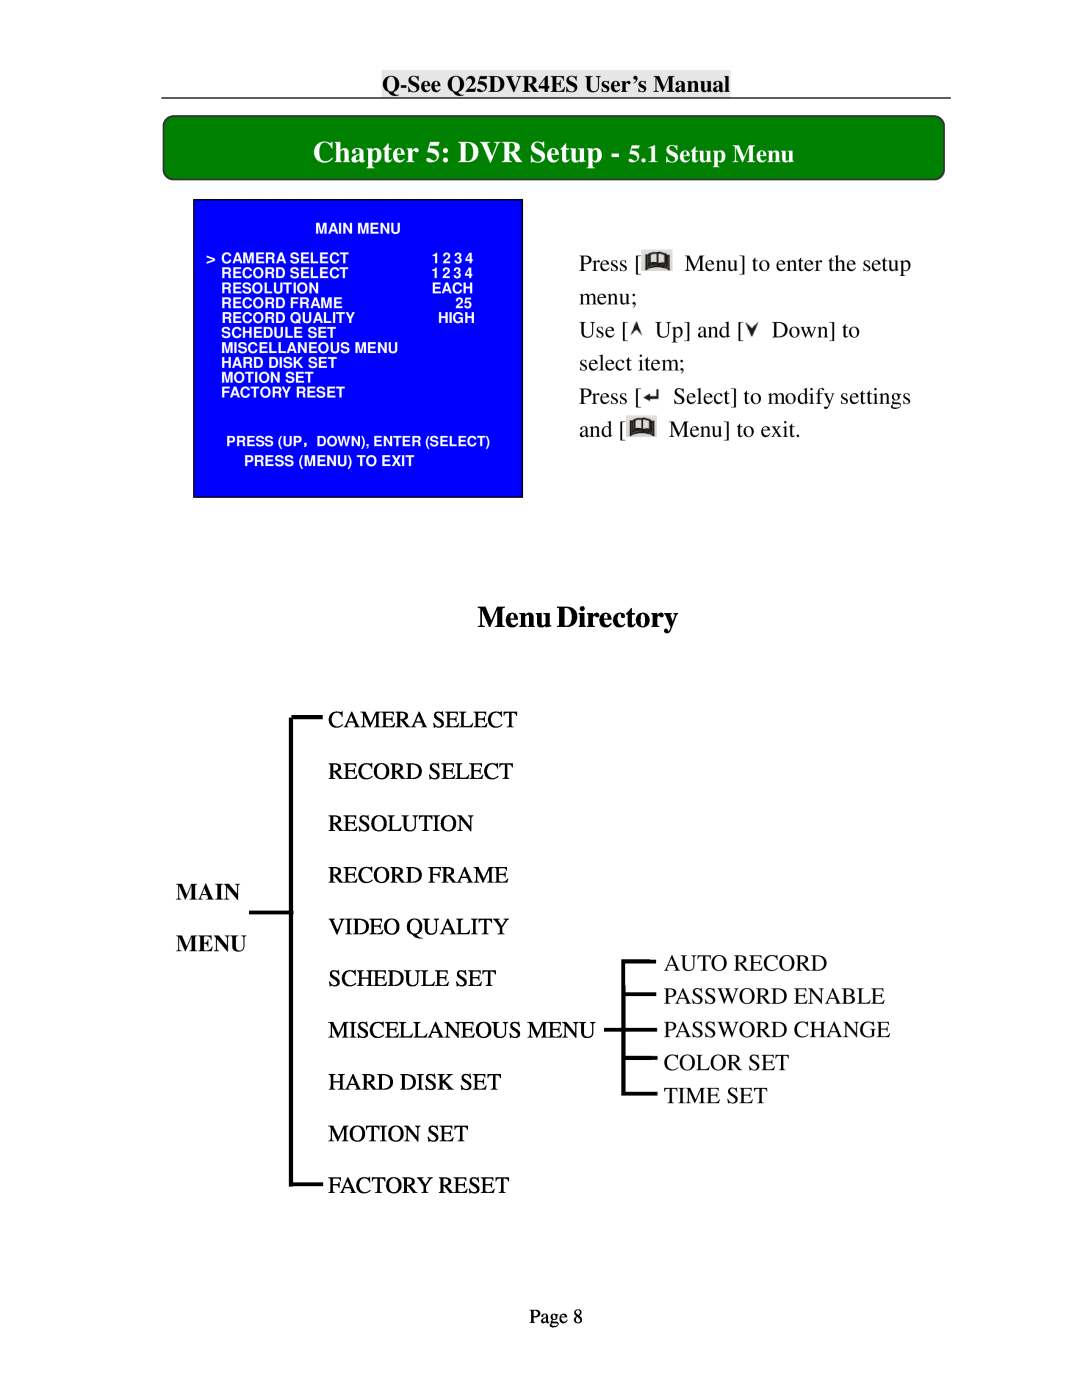 Q-See user manual DVR Setup - 5.1 Setup Menu, Menu Directory, Q-SeeQ25DVR4ES User’s Manual, Main Menu 